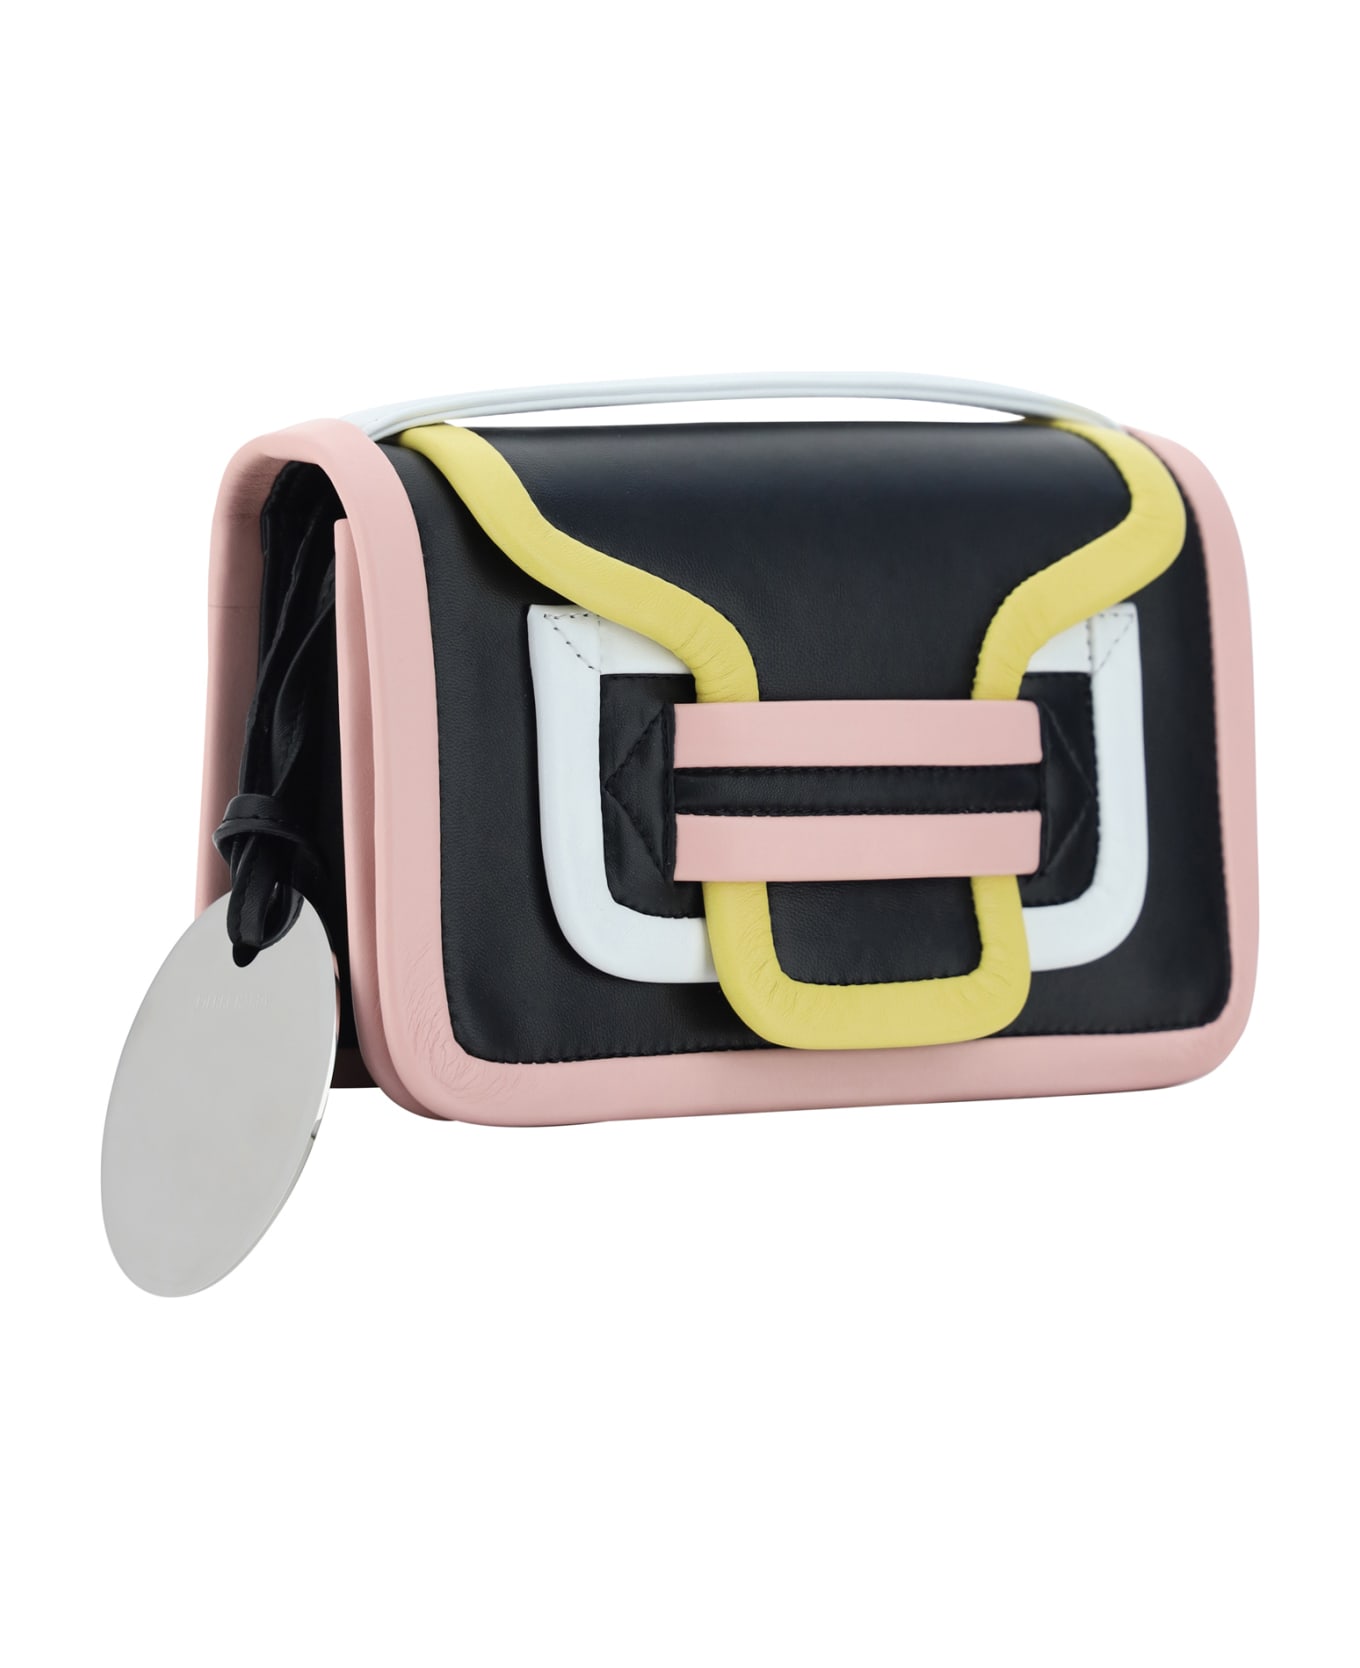 Pierre Hardy Alpha Handbag - Black/pink/yellow